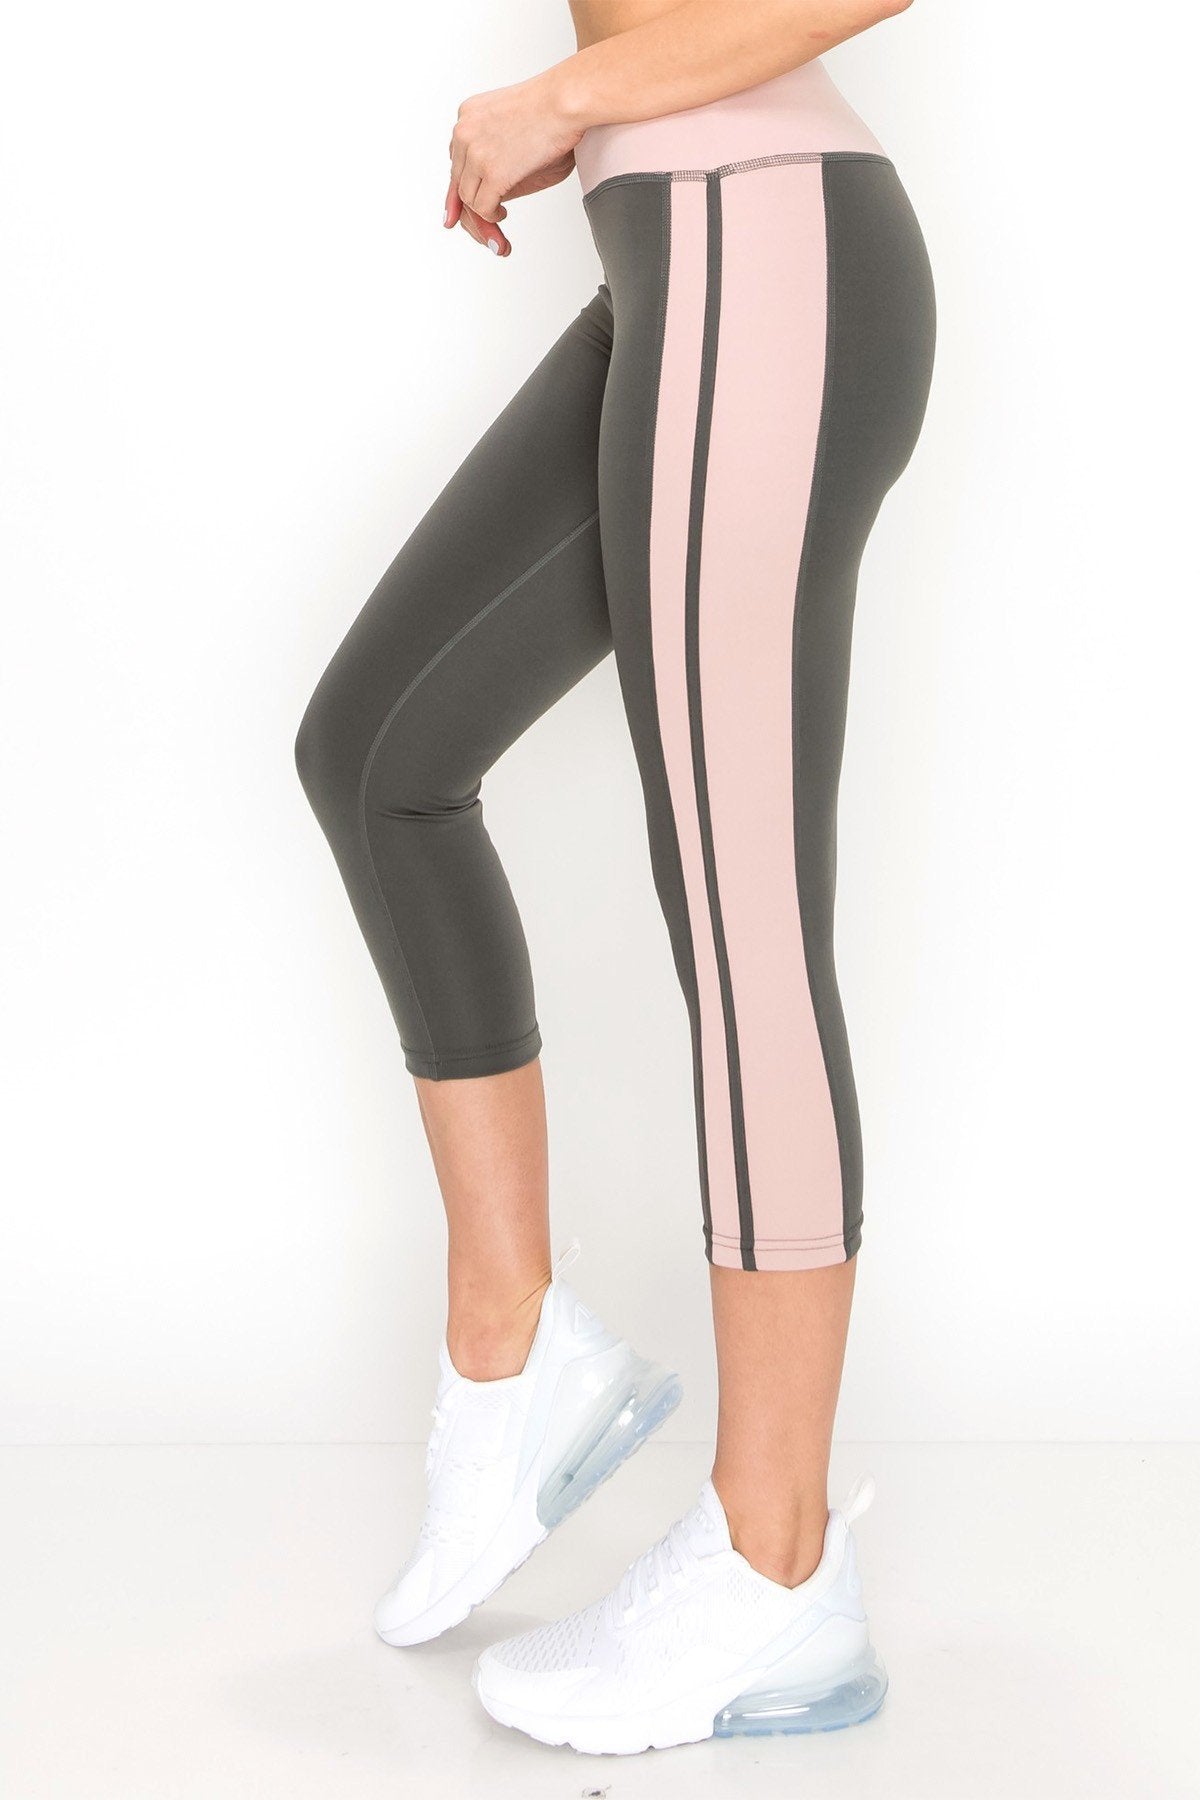 Core 10 Women's Build Your Own Flashflex Run Capri Legging-21 (XS-XL -  ShopStyle Activewear Pants